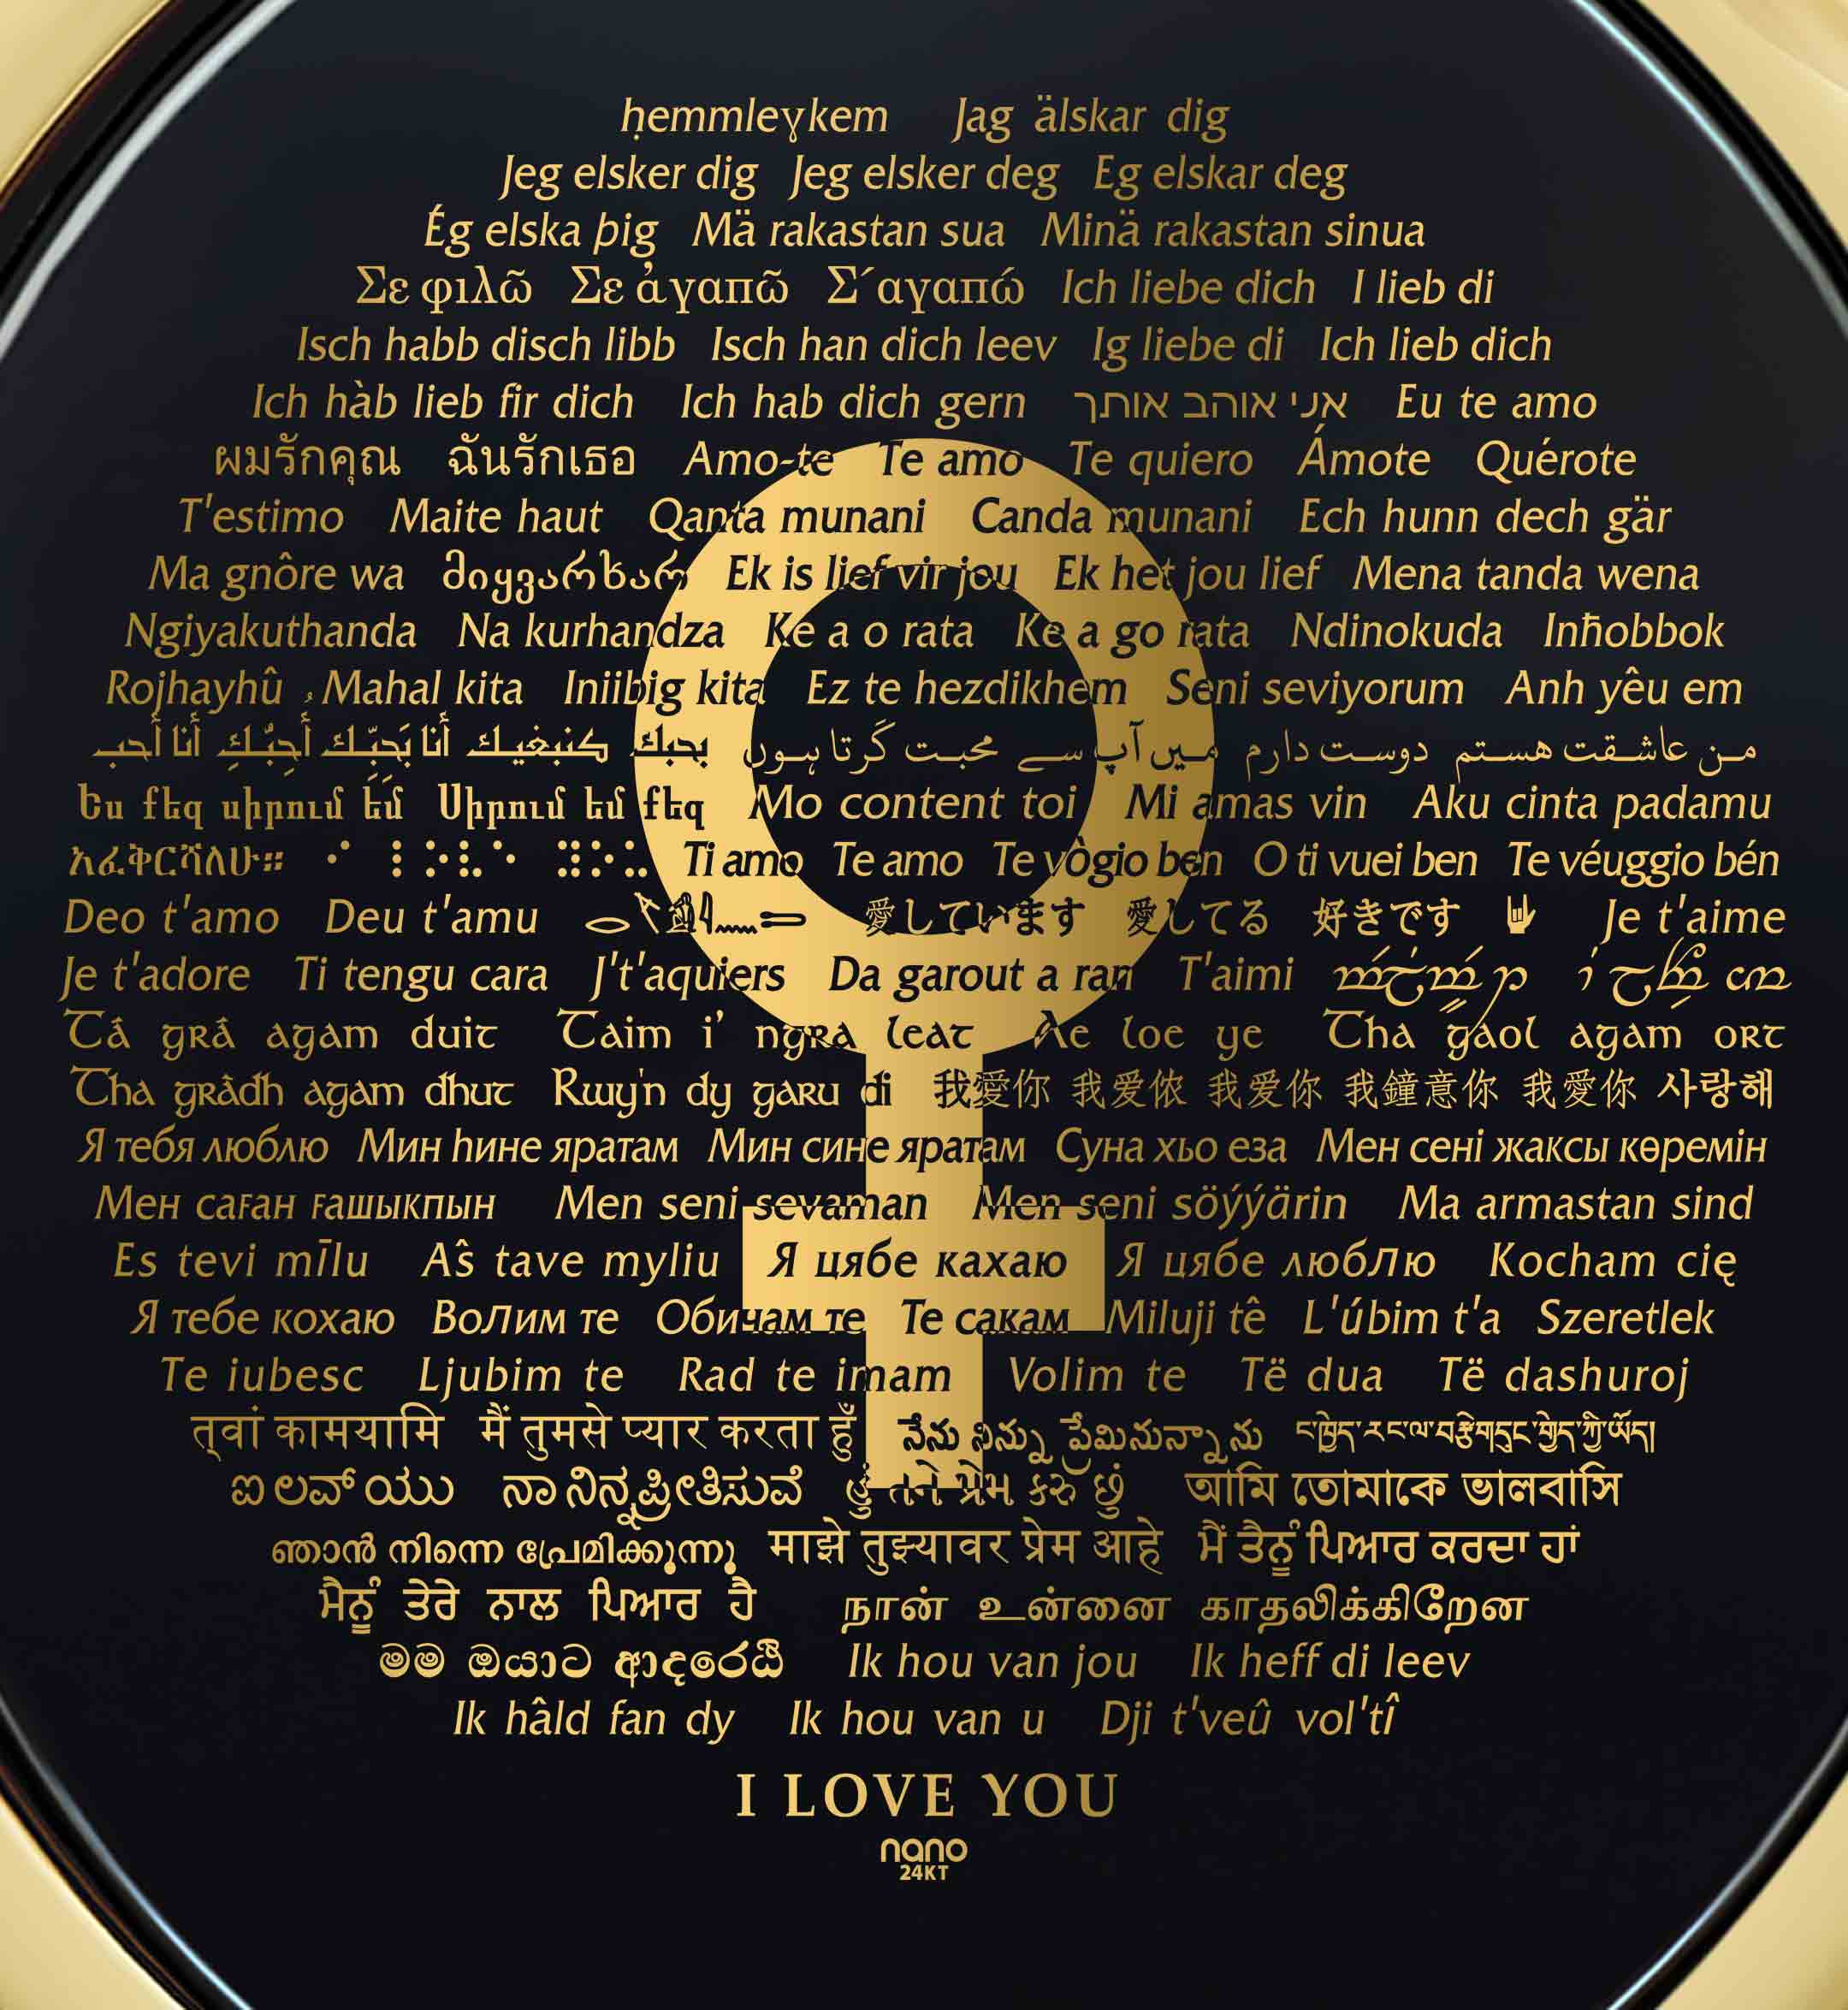 Onyx Venus Pendant - 'I Love You' in 120 Languages